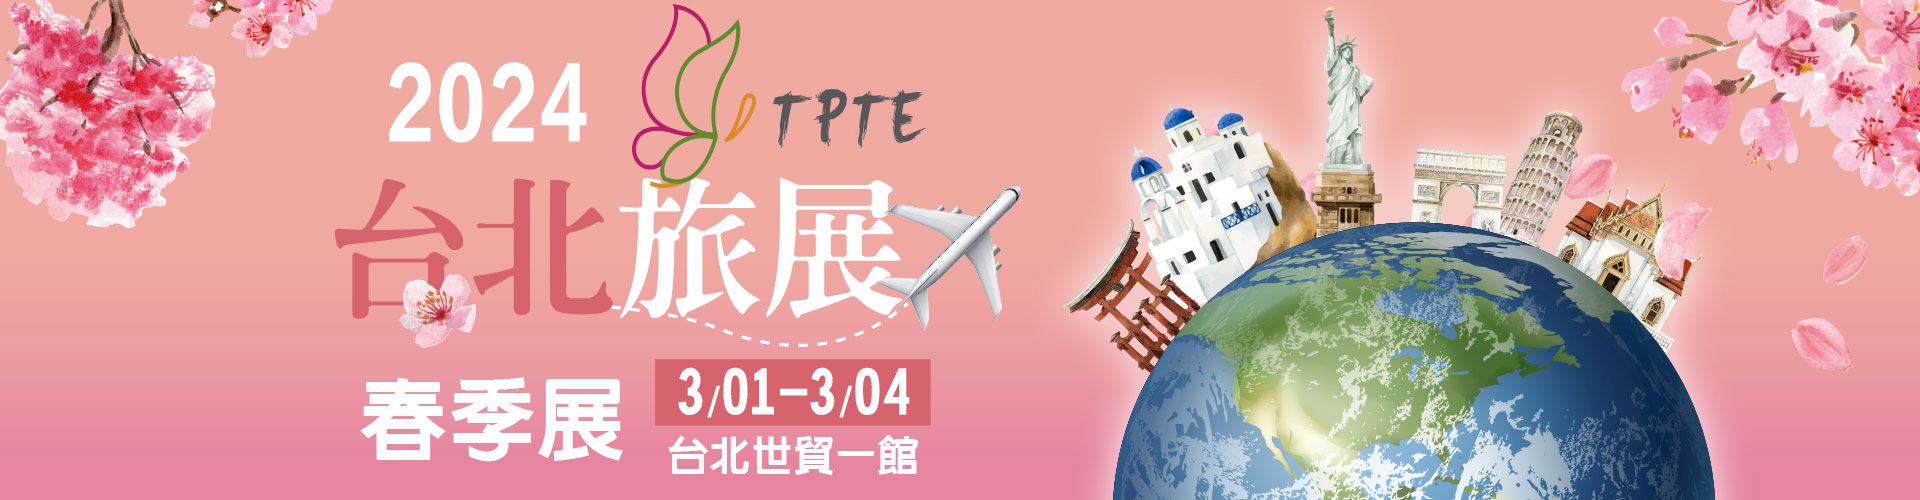 2024 TPTE台北旅展